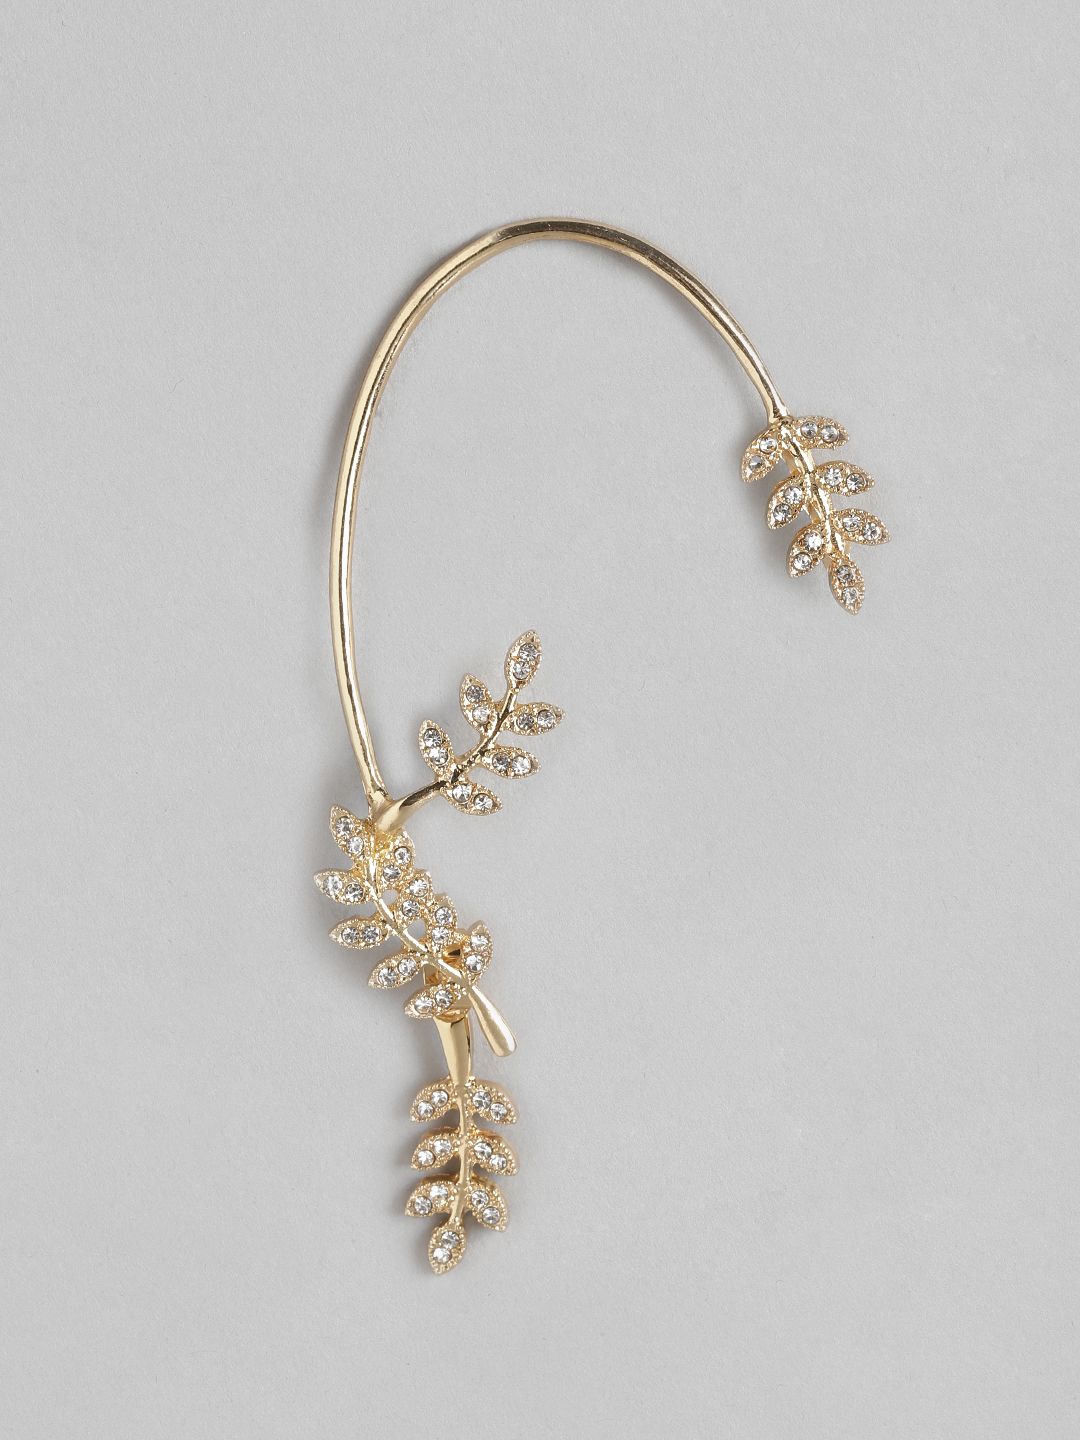 Carlton London Rose Gold Leaf Shaped Ear Cuff Earrings Price in India